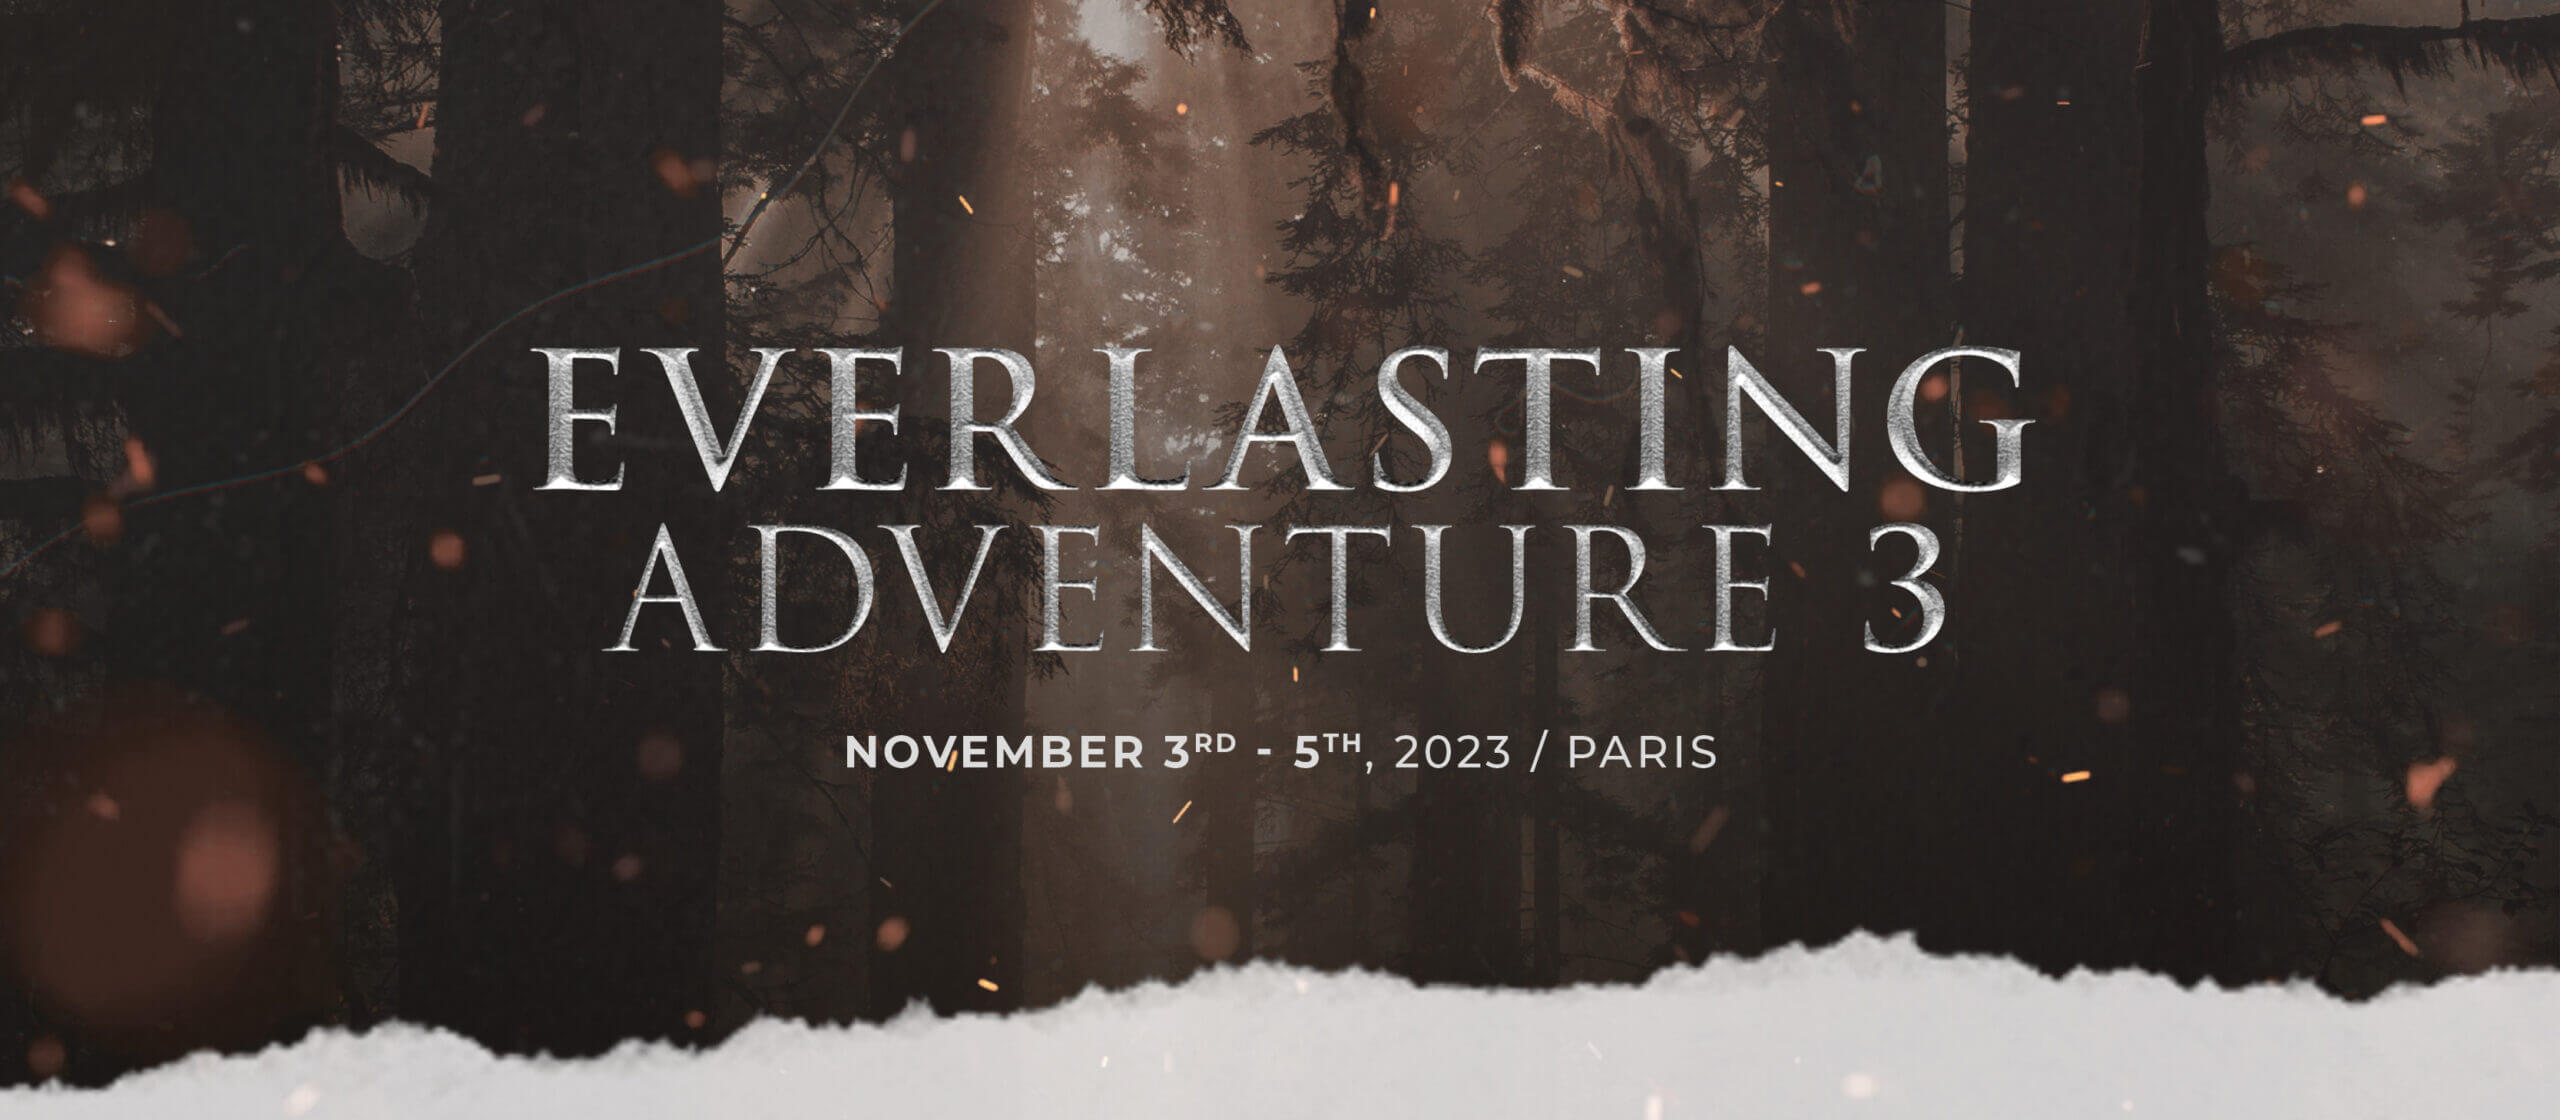 Everlasting Adventure 3